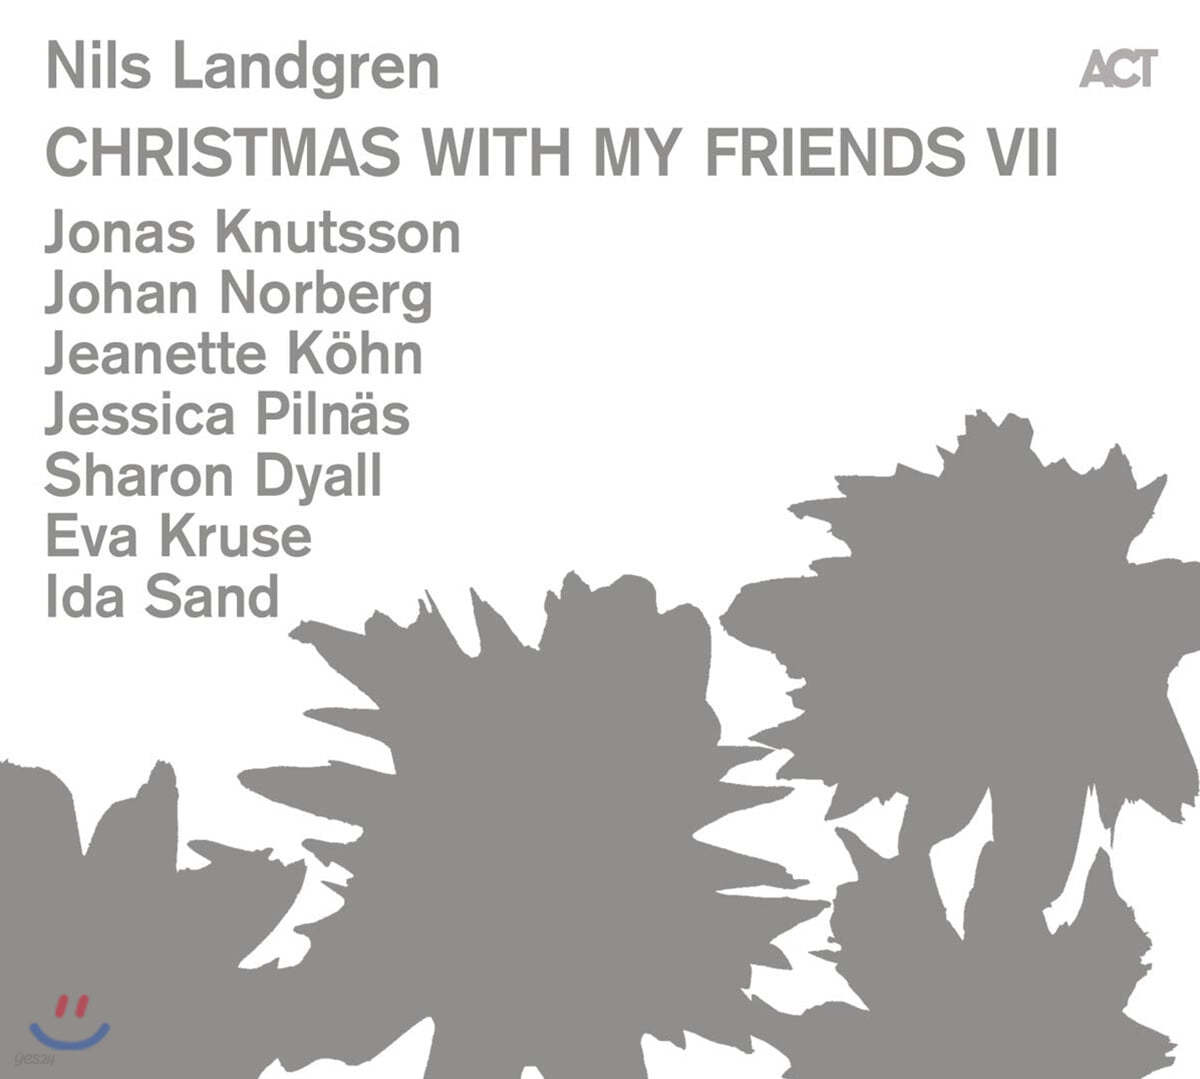 Nils Landgren - Christmas With My Friends VII 닐스 란드그렌 크리스마스 앨범 7집 